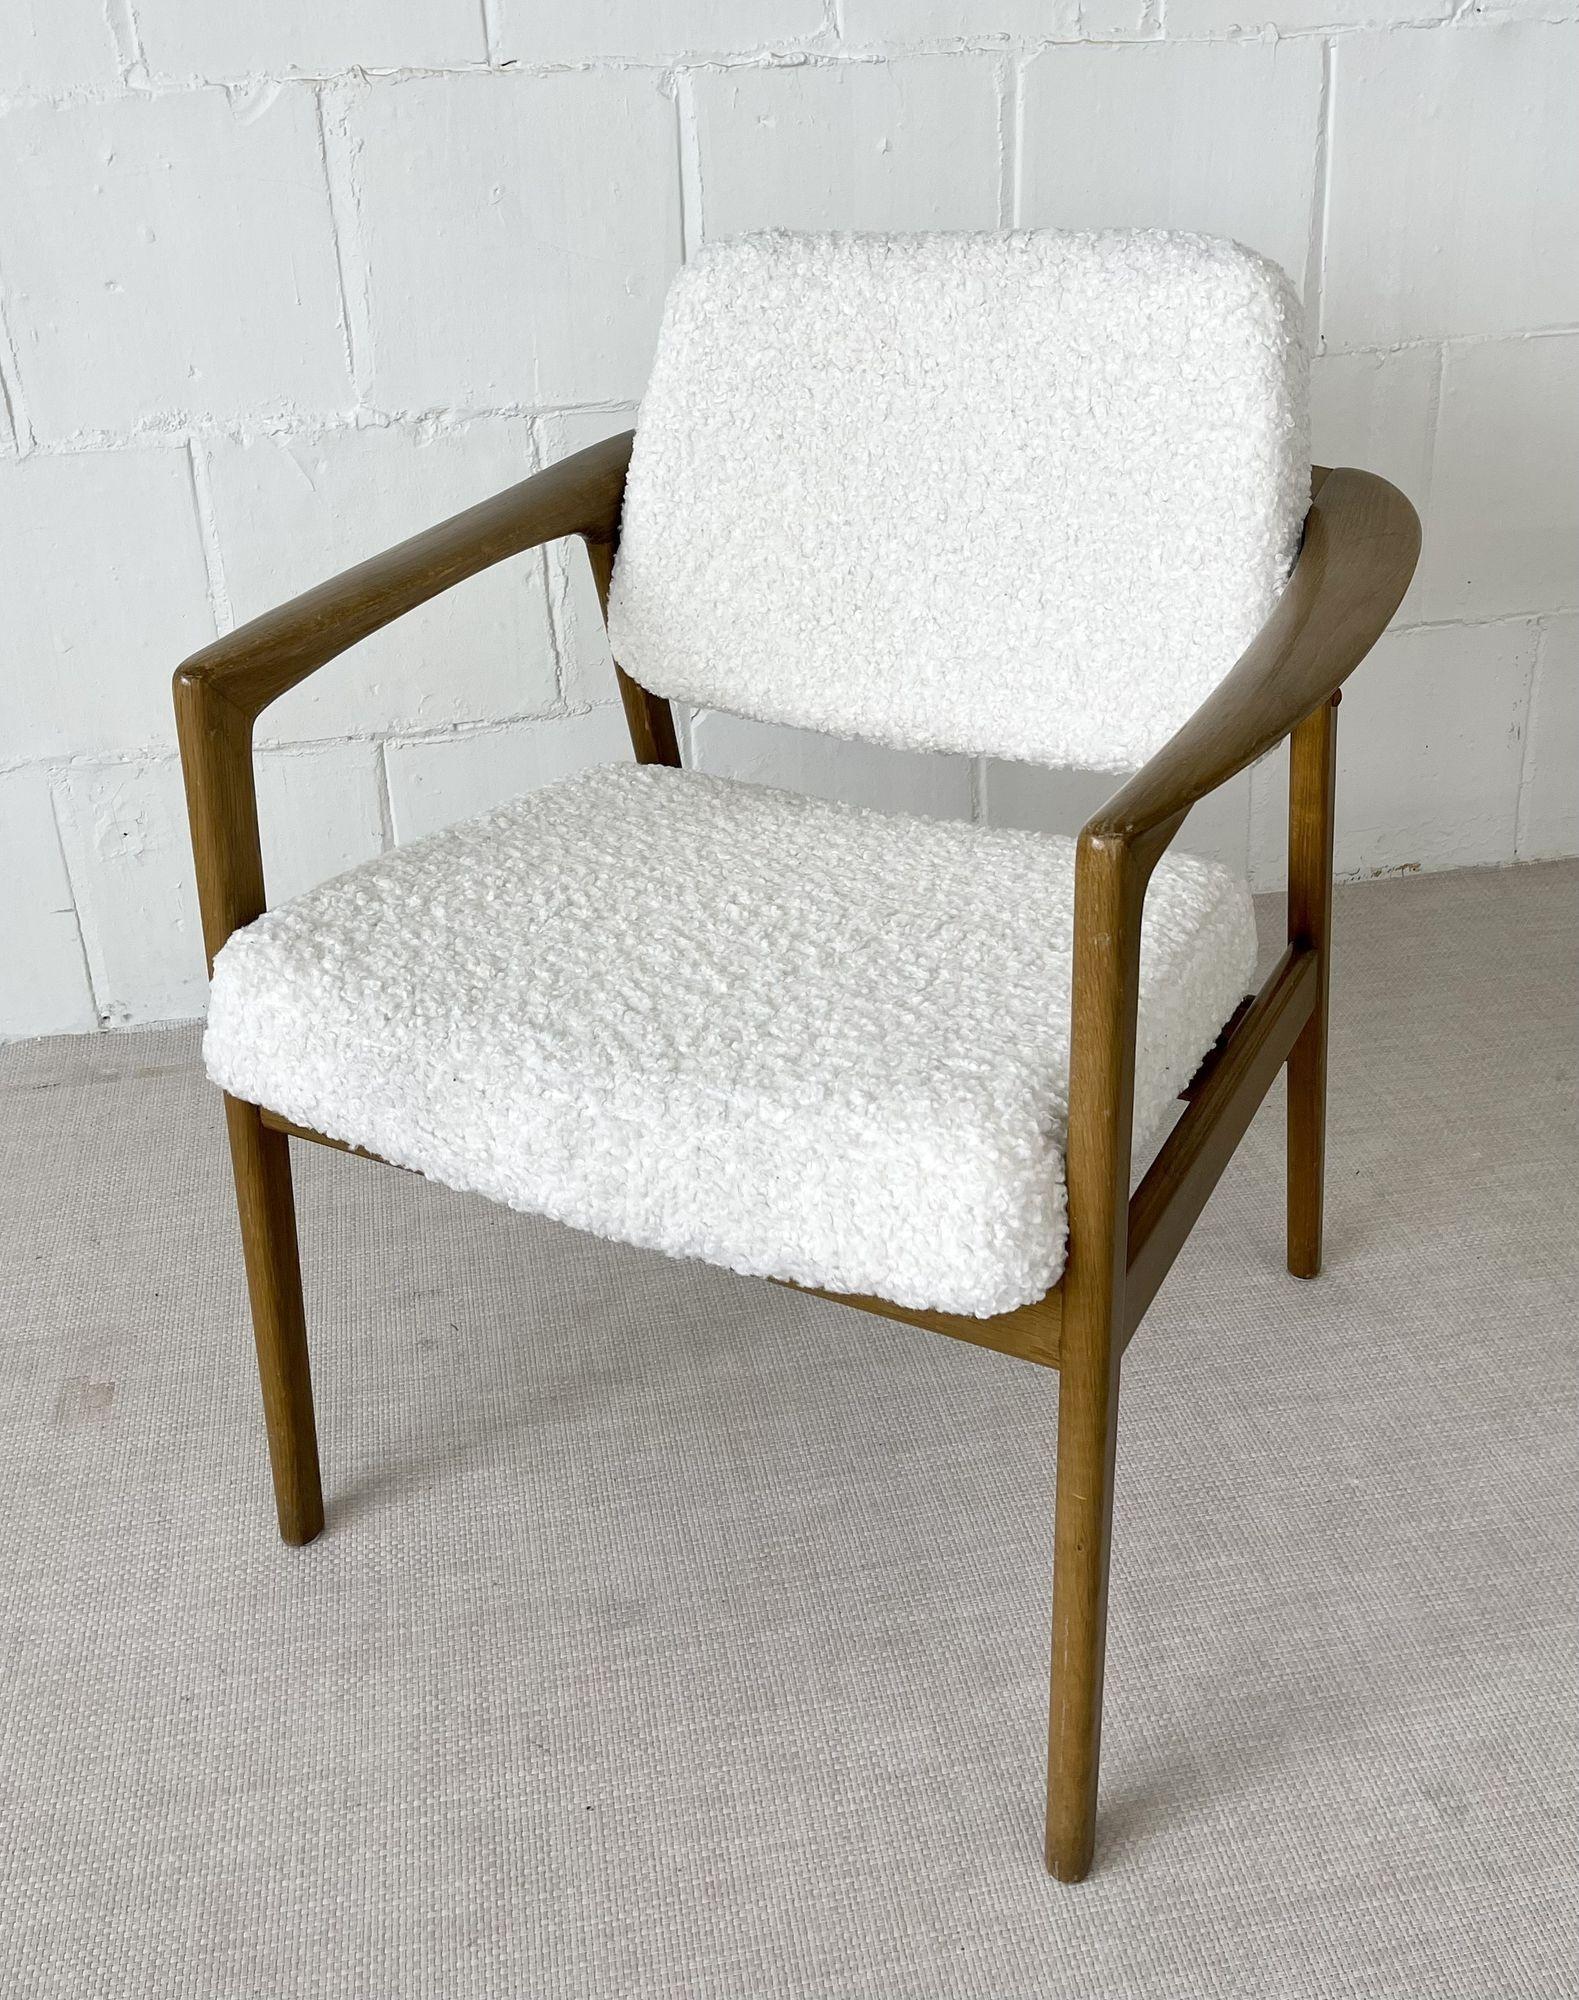 Swedish Designer, Mid-Century Accent Chairs, White Sheepskin, Oak, Sweden, 1960s For Sale 5